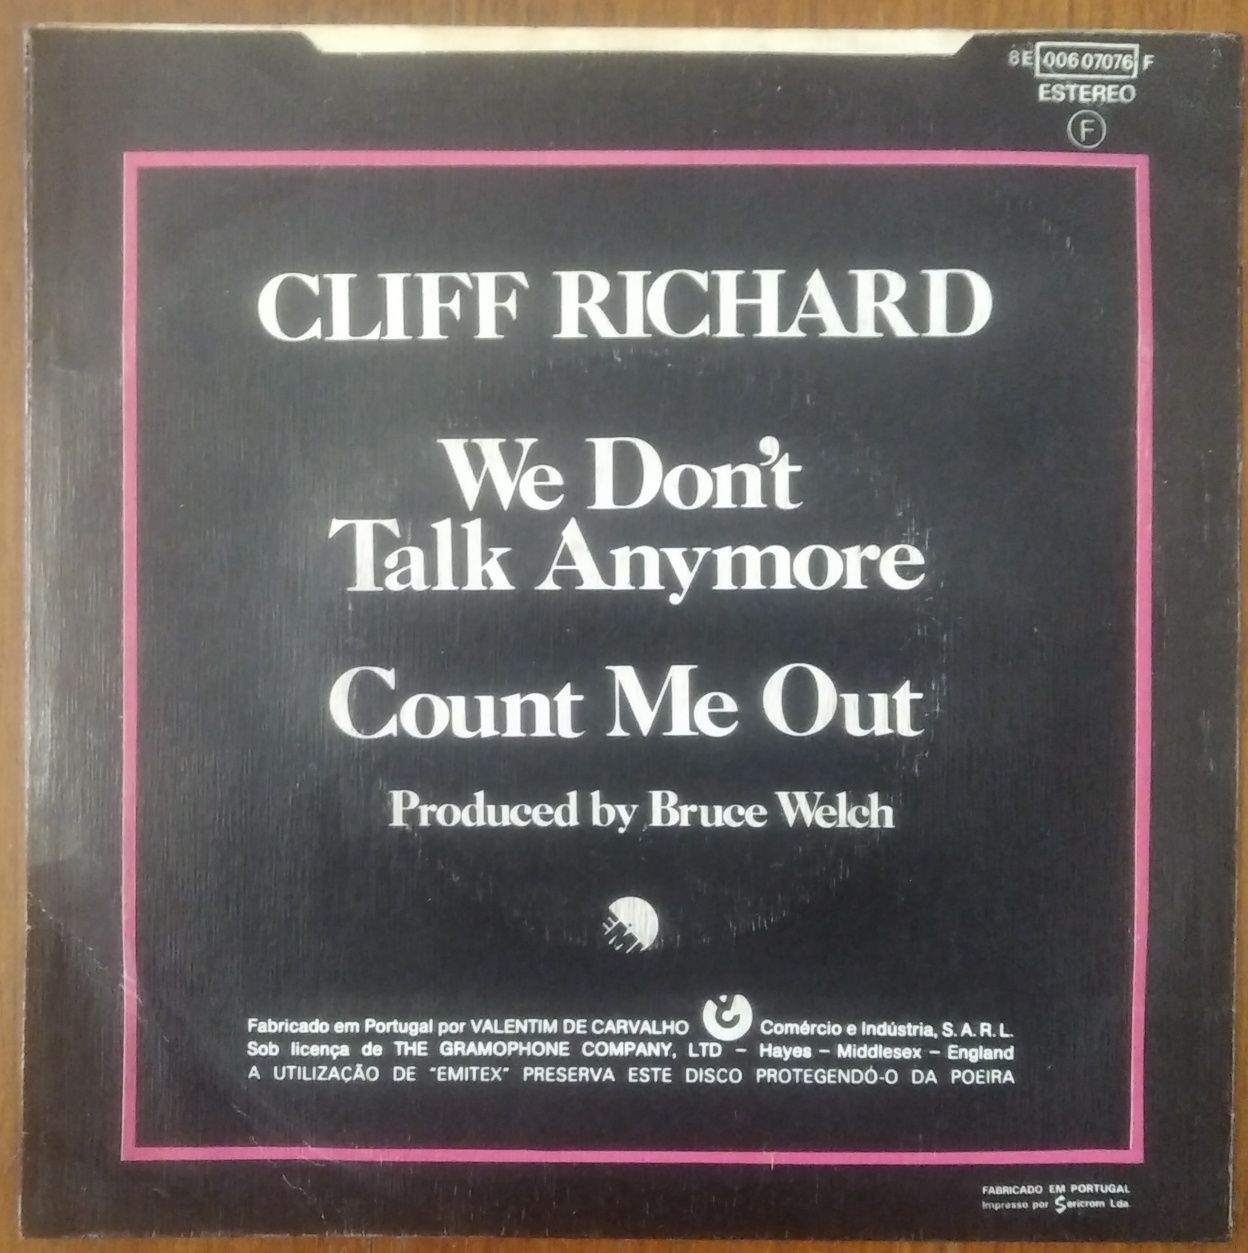 Cliff Richard single em vinil "We Don't Talk Anymore"